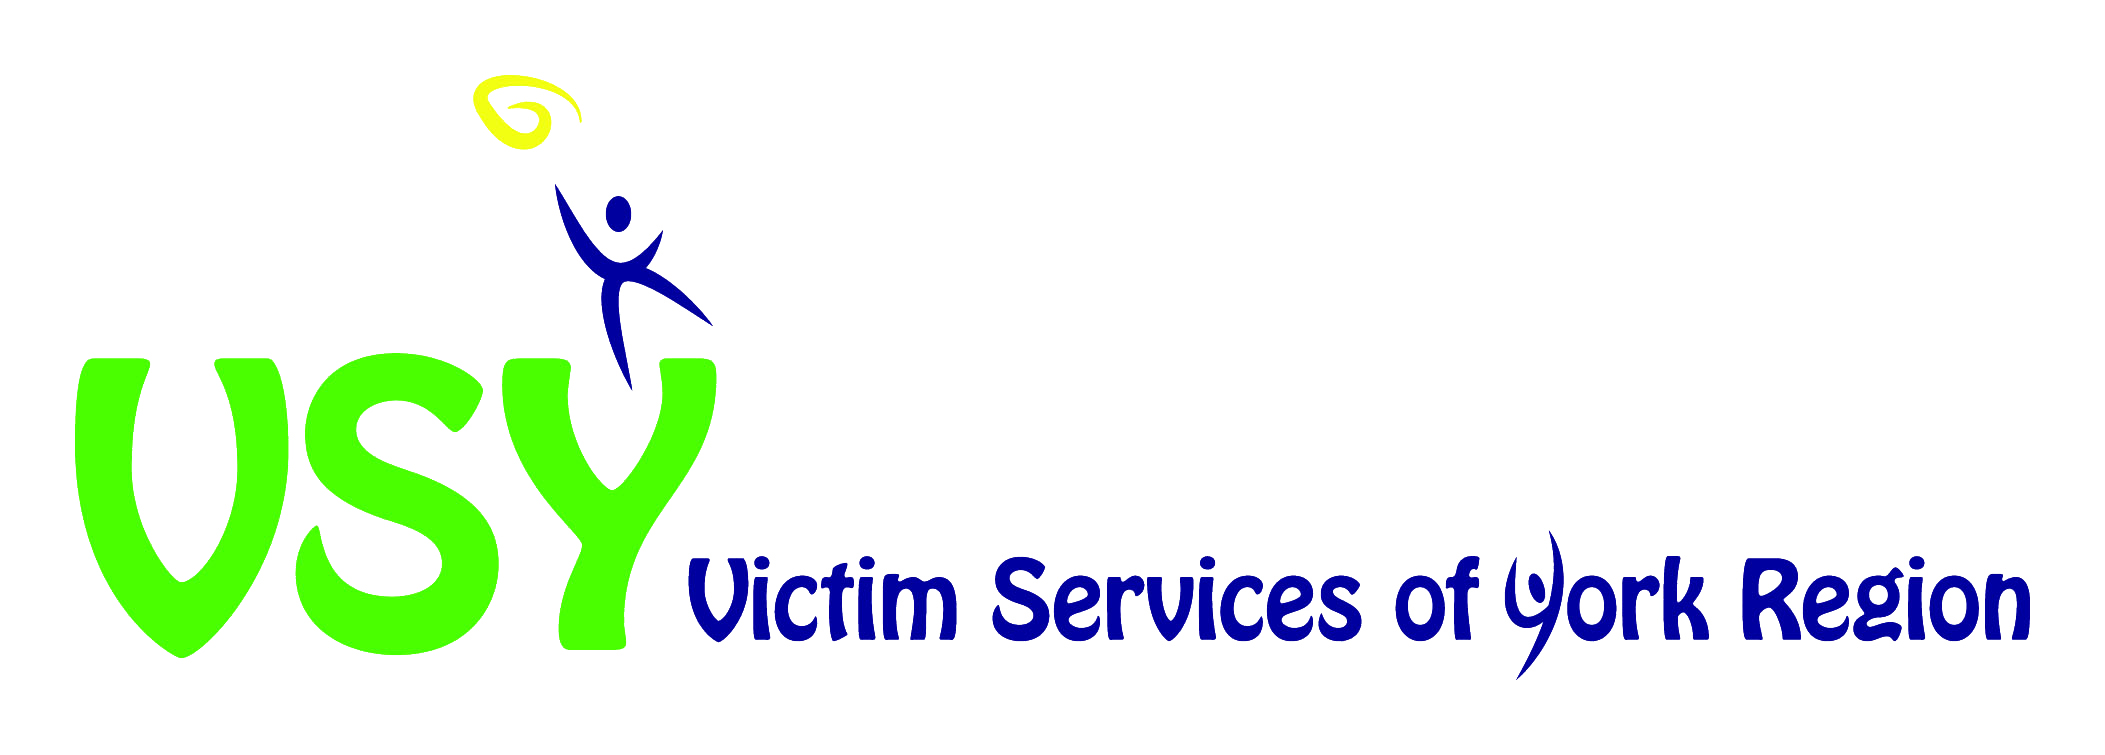 The Victim Services logo